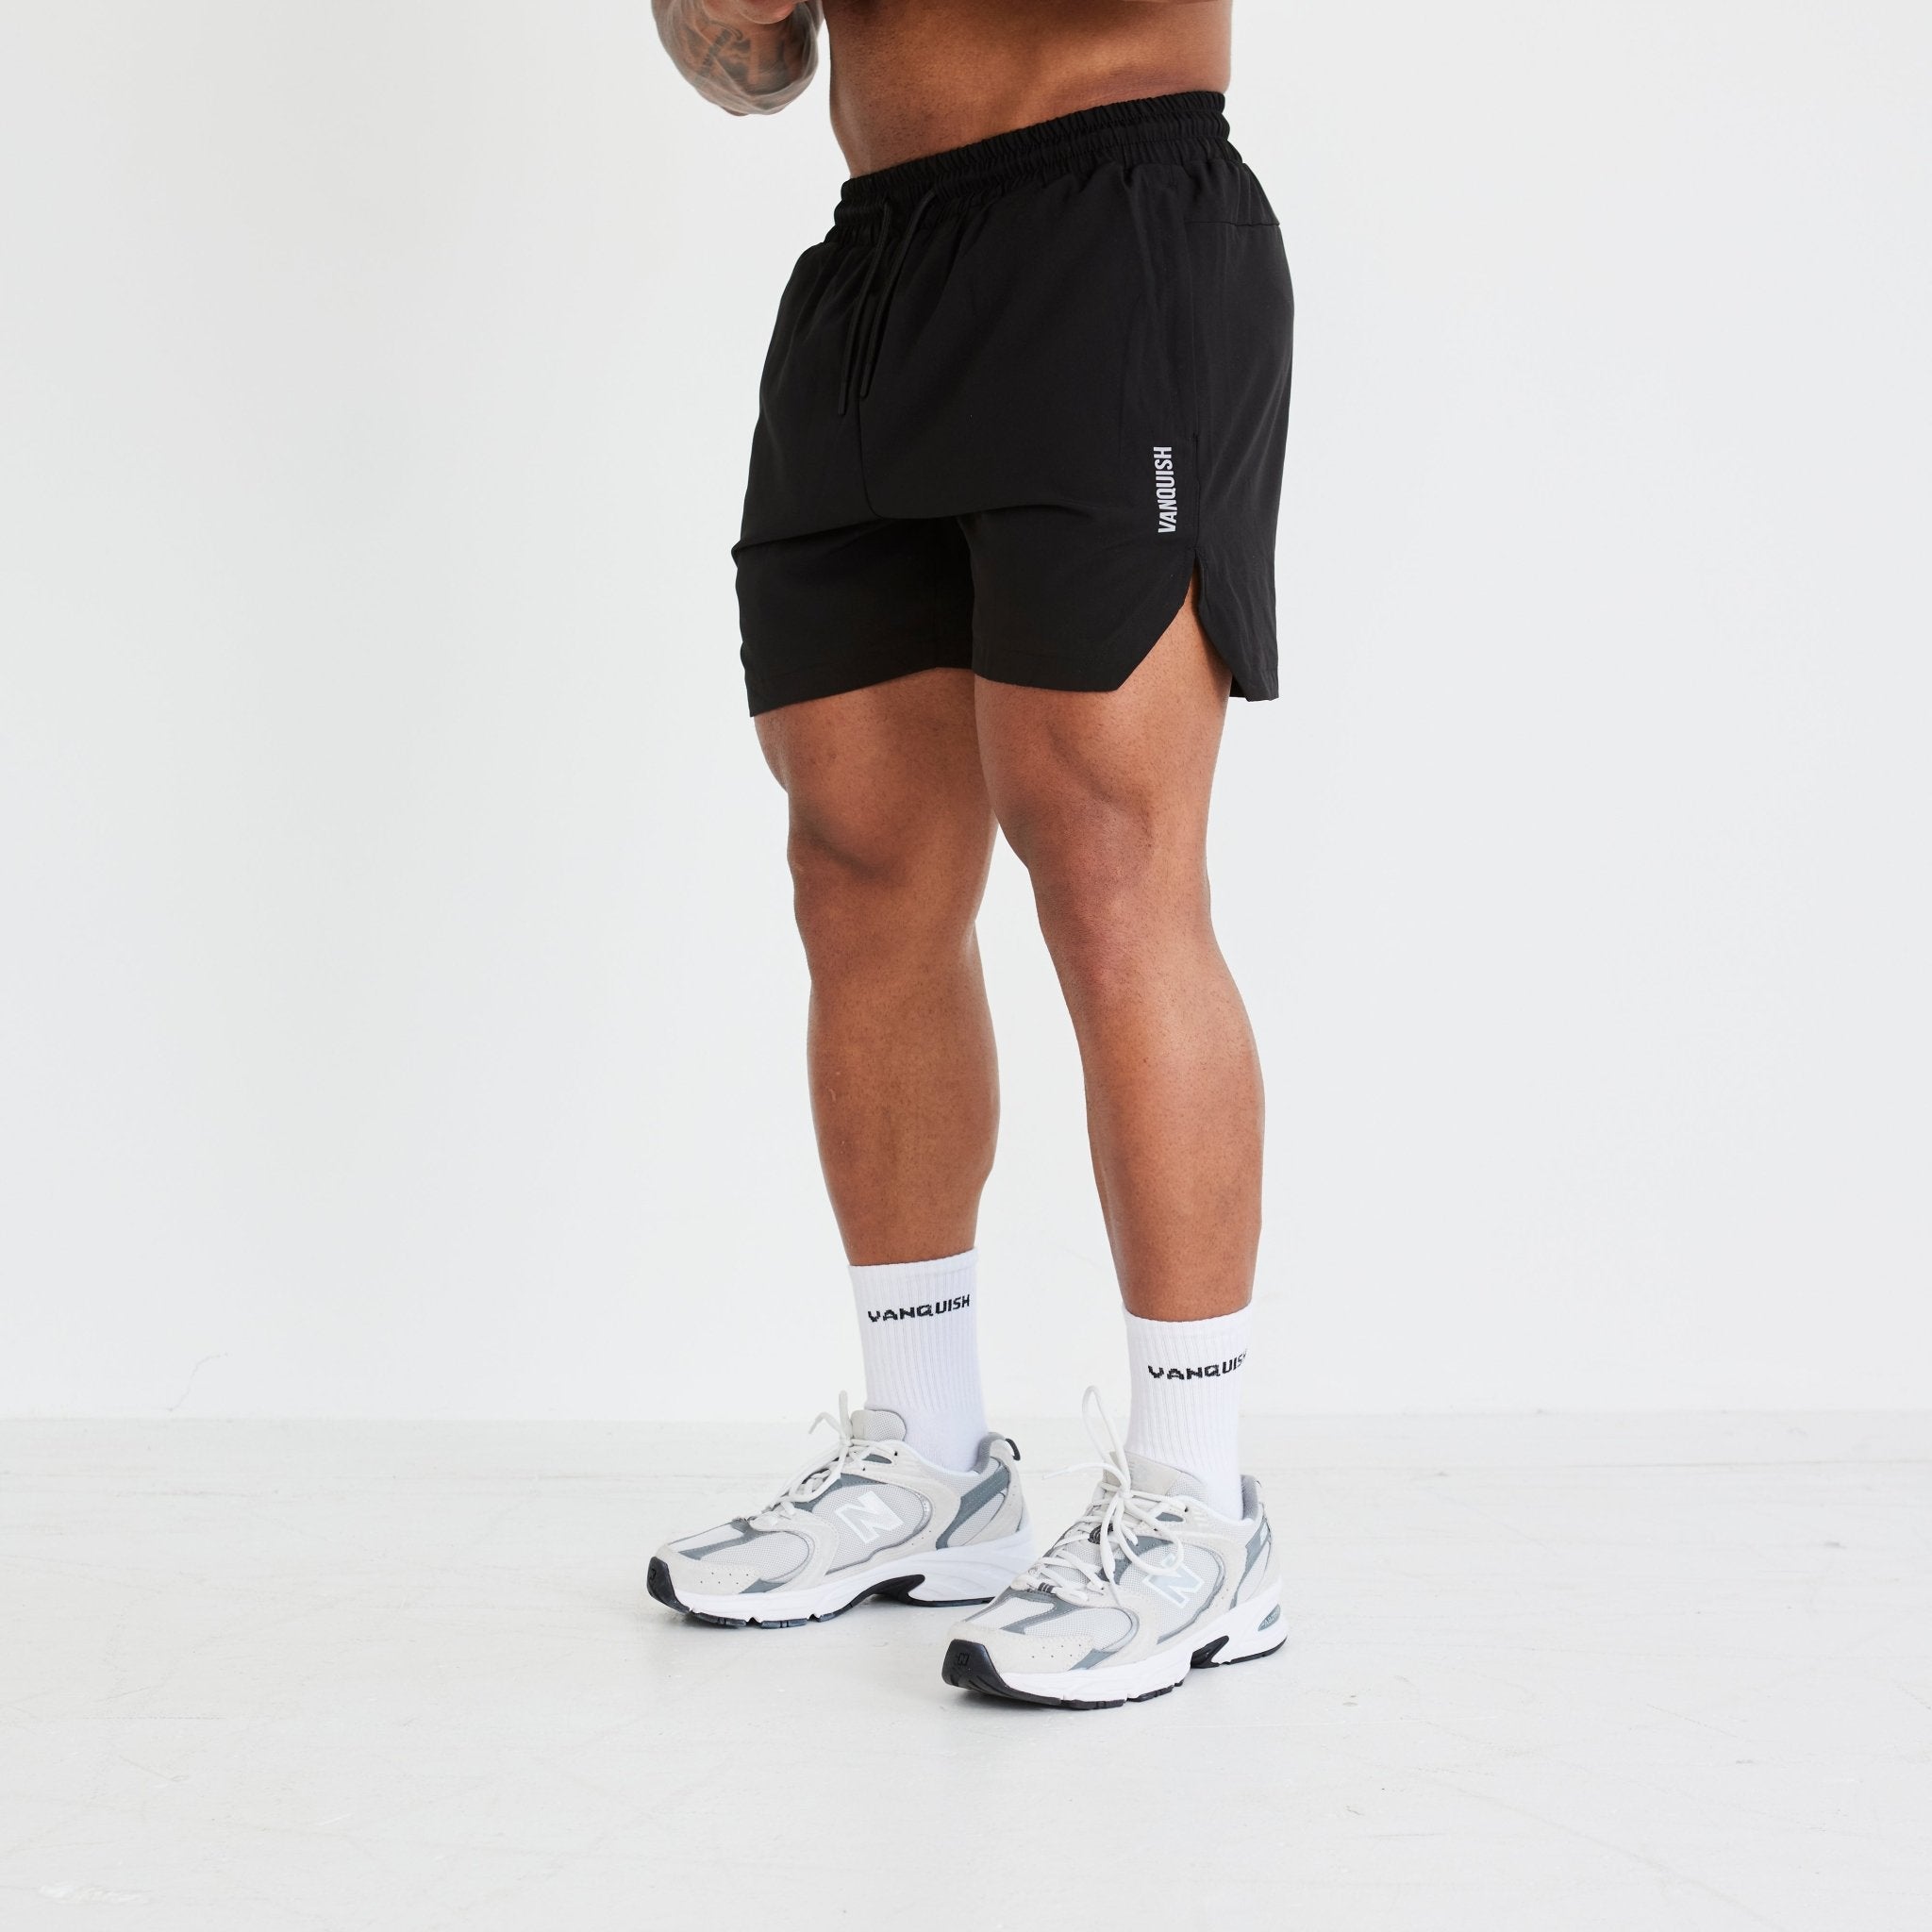 Vanquish Essential Black Performance 4" Shorts - Vanquish Fitness